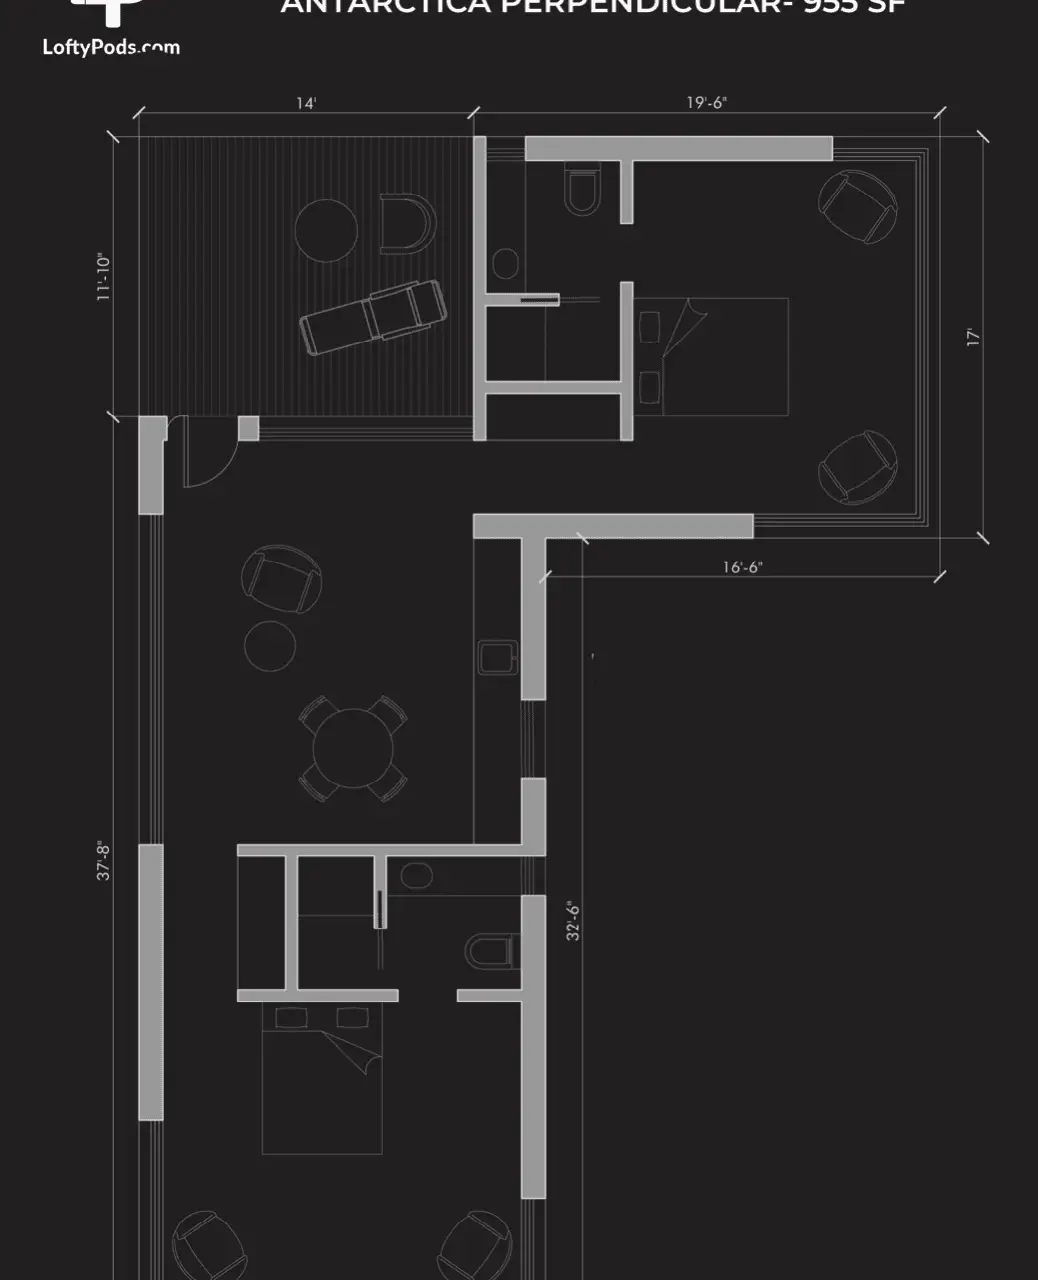 Antacrtica Perpendicular Floor Plan